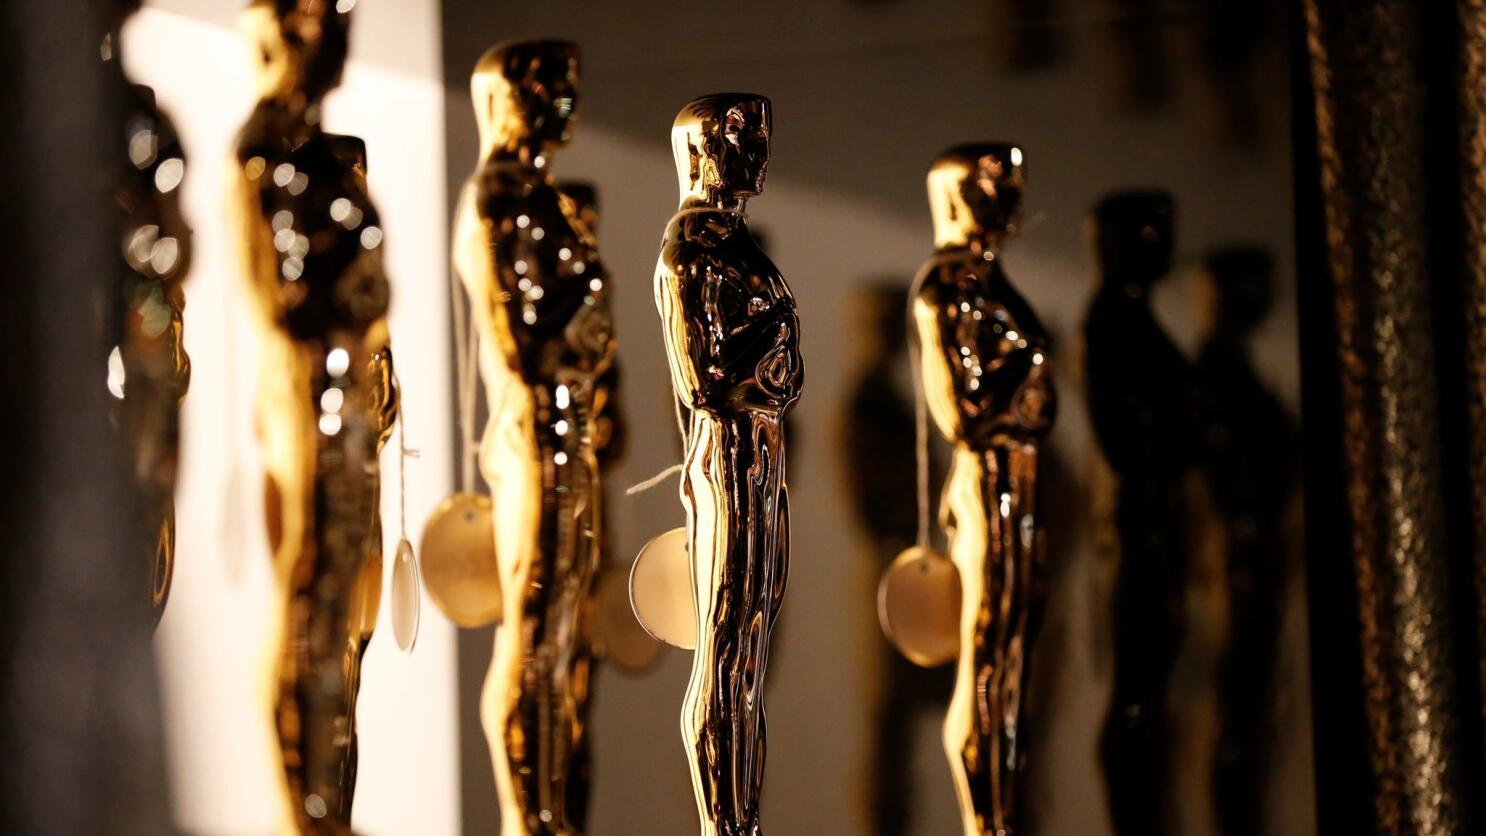 88th Academy Awards - Wikipedia